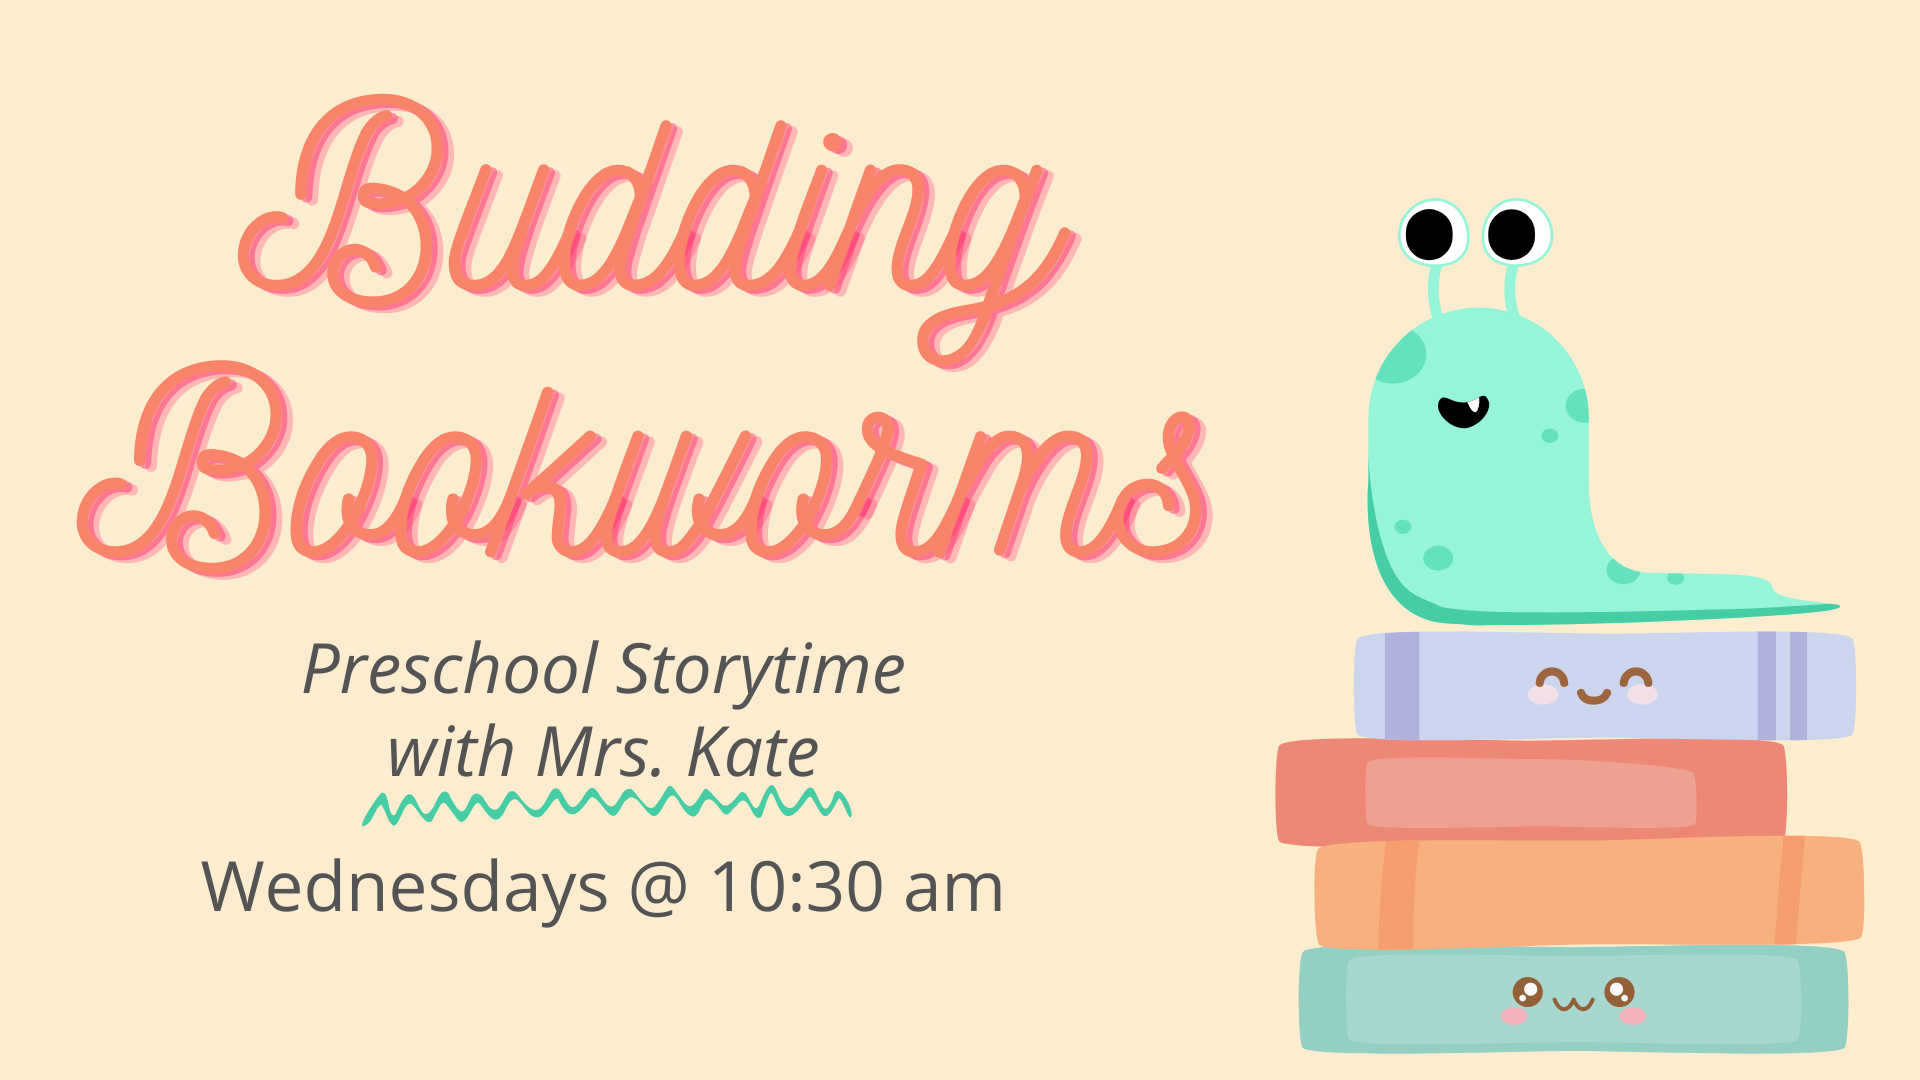 Budding Bookworms Graphic